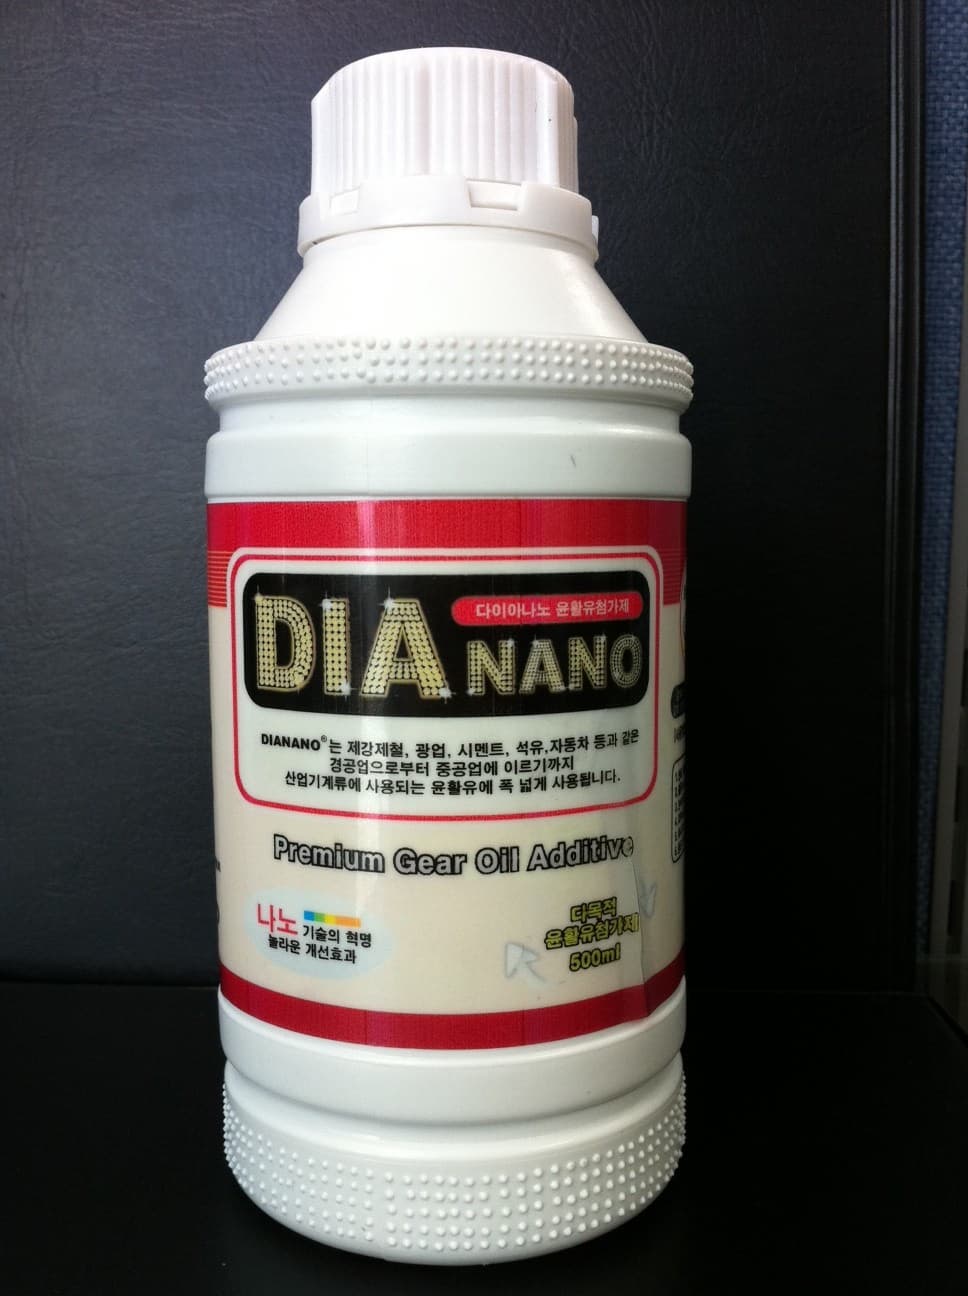 DIANANO,Maintenance & Energy Saving Gear Oil Additive